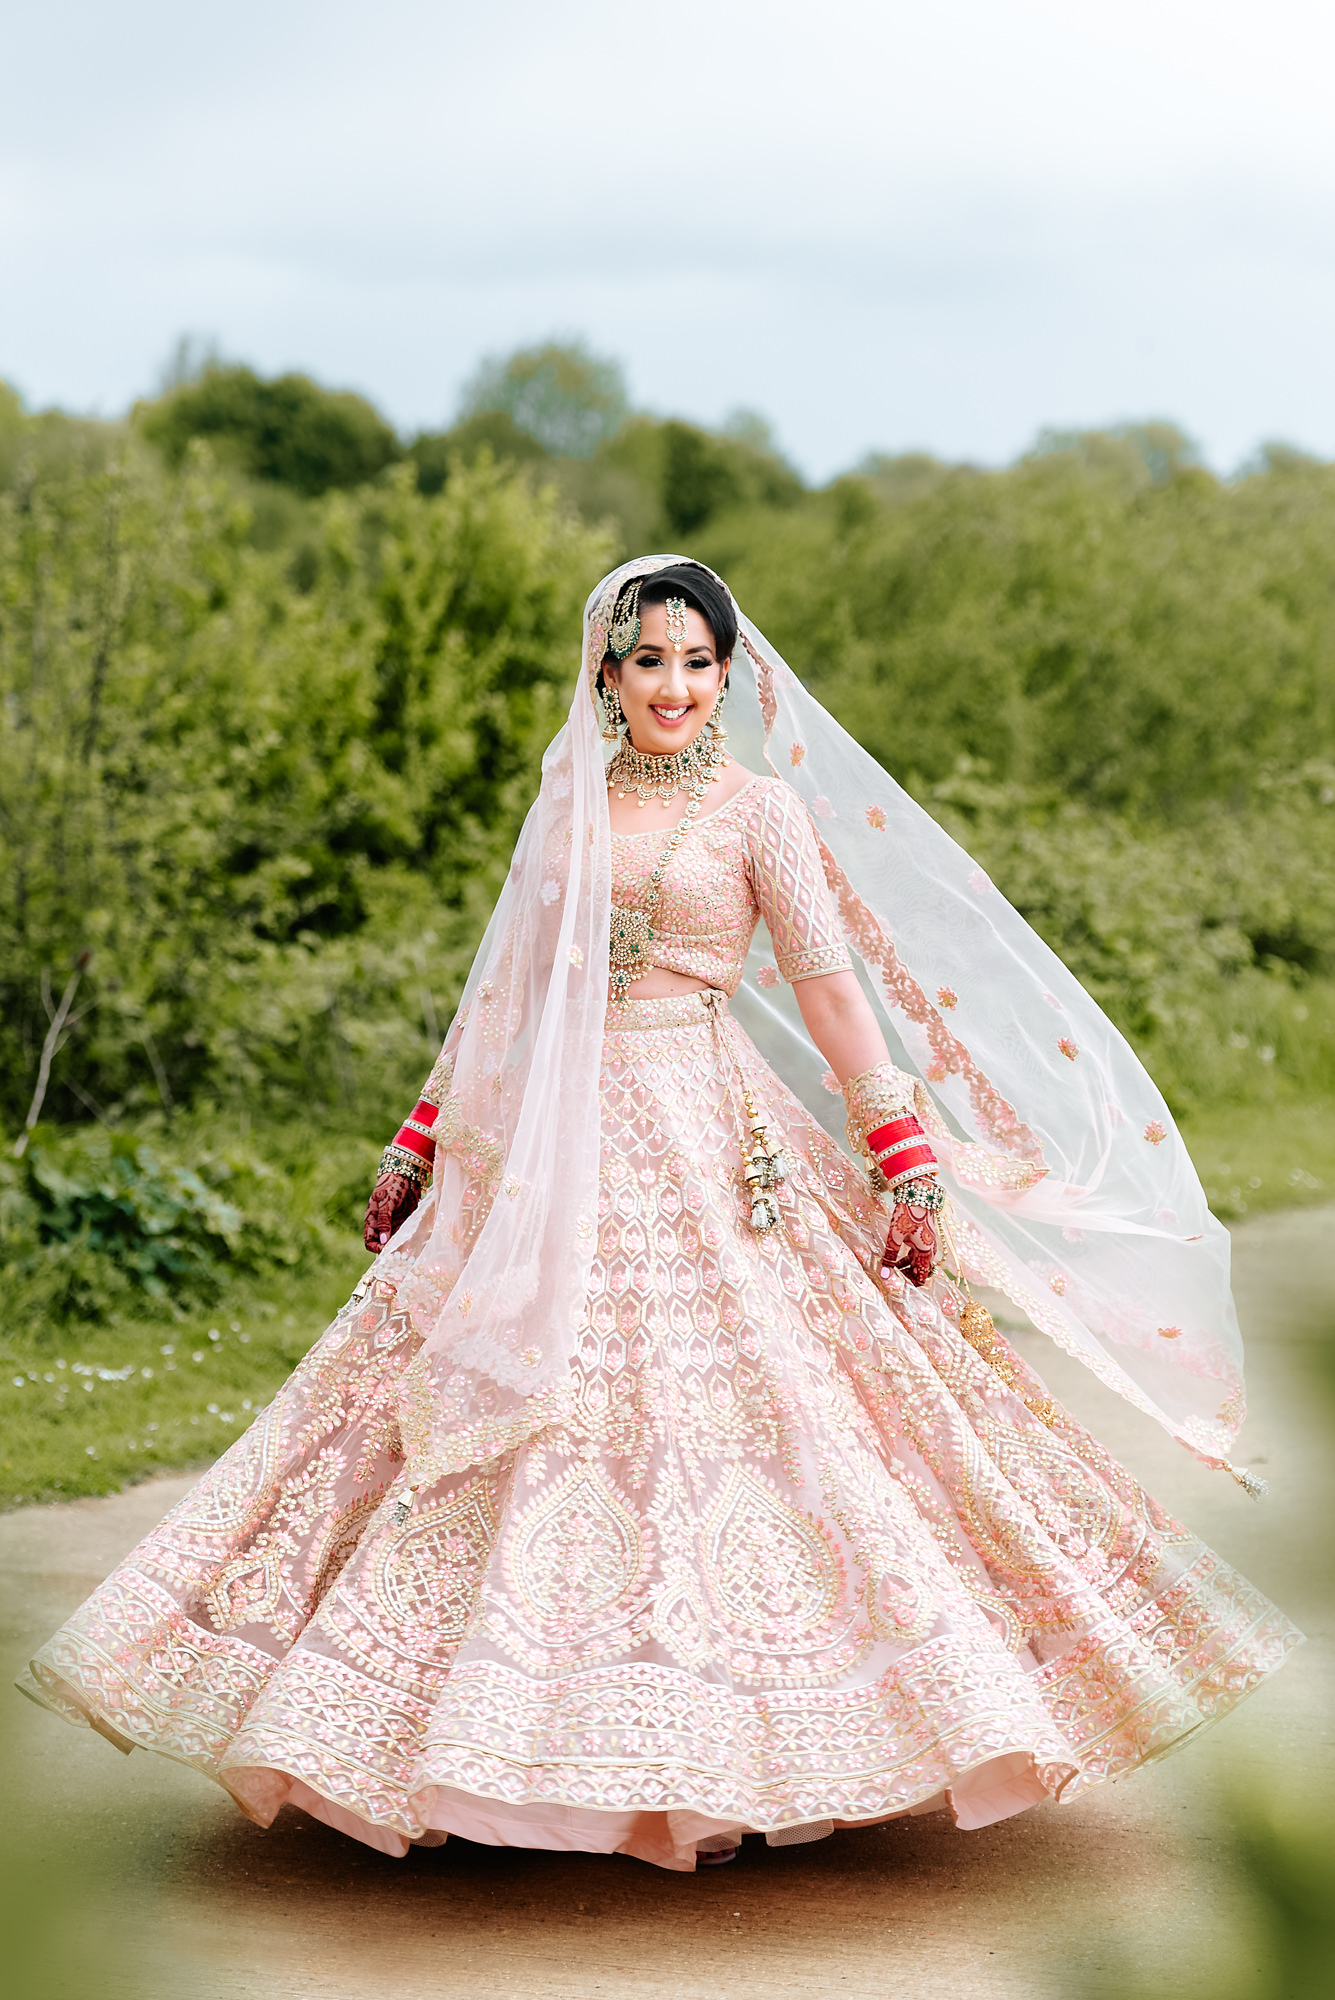 spinning dress photo Sikh bride